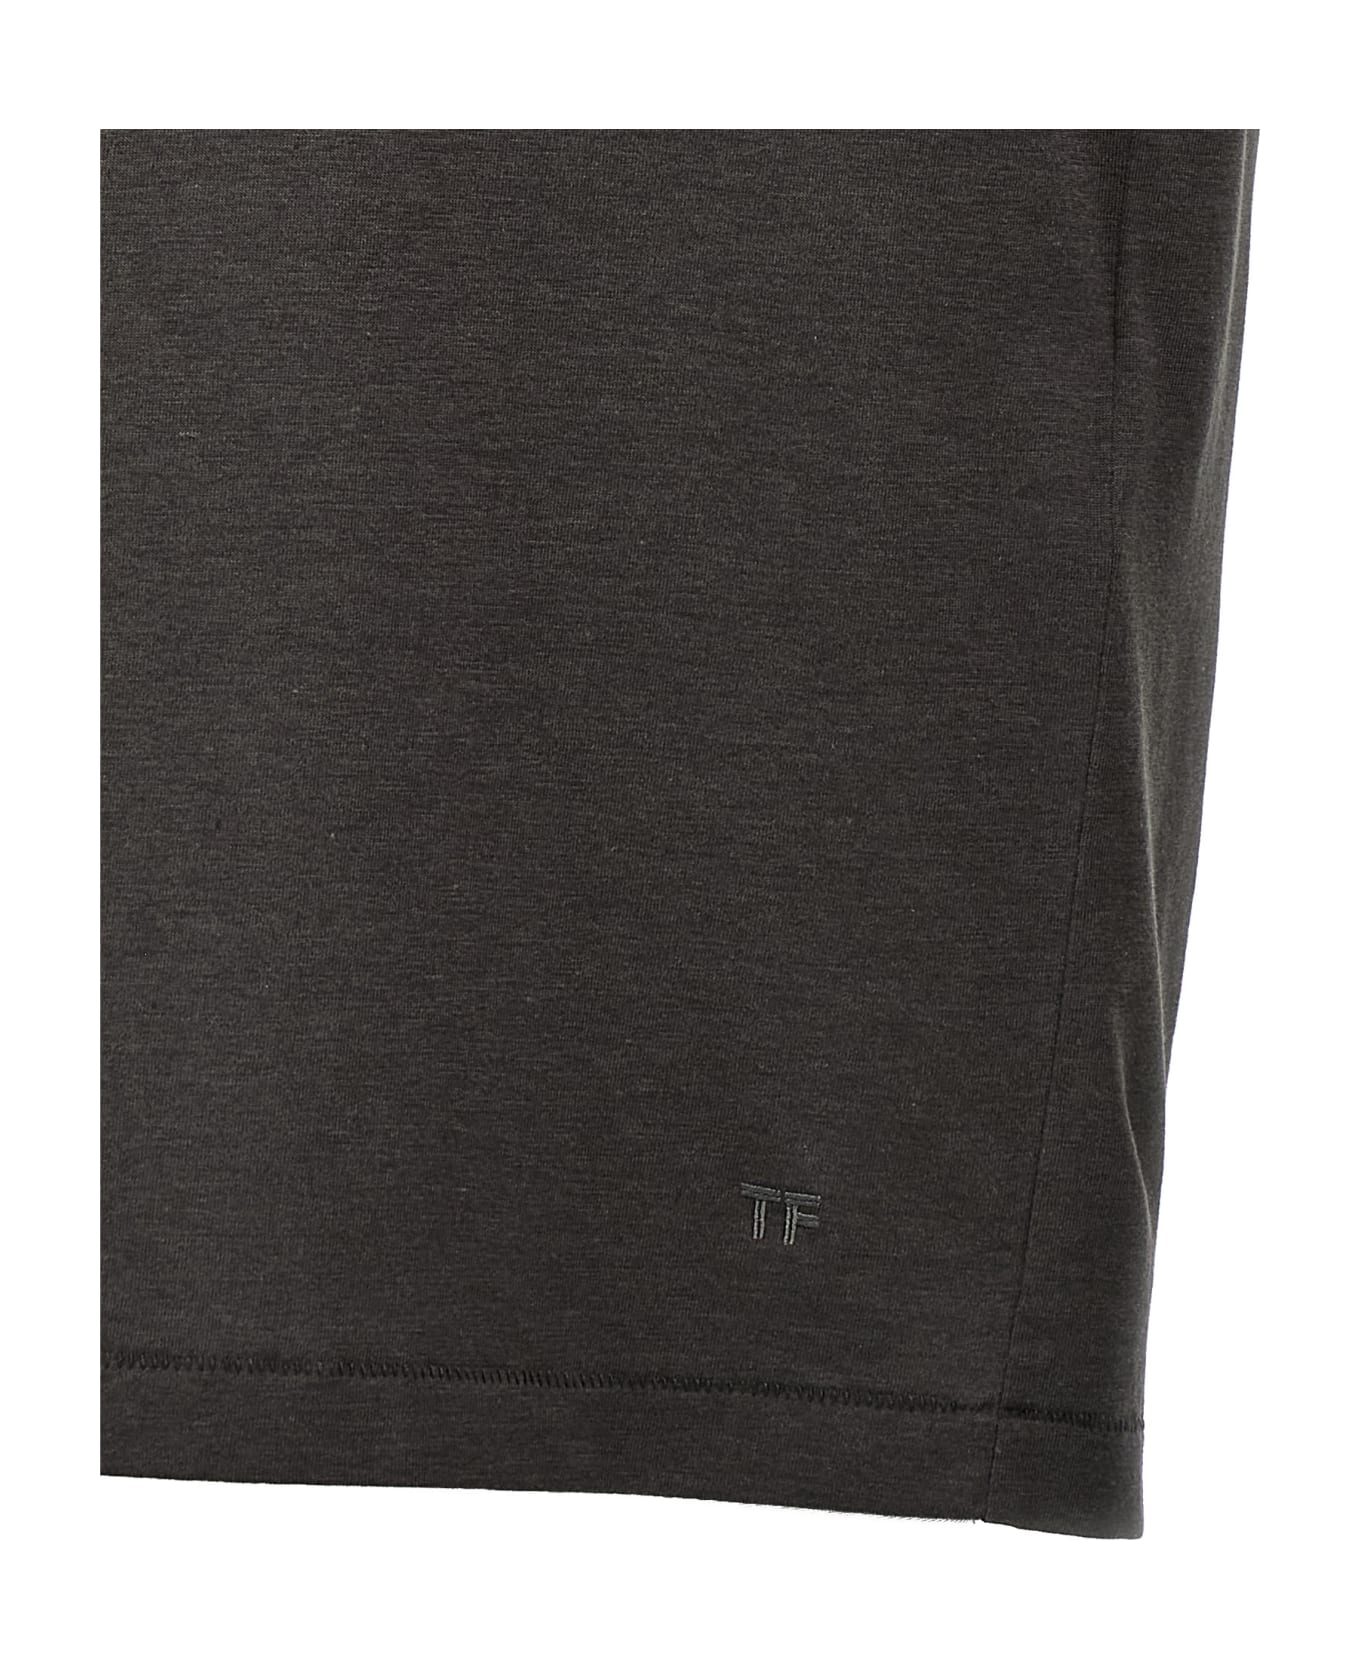 Tom Ford Basic T-shirt - Gray